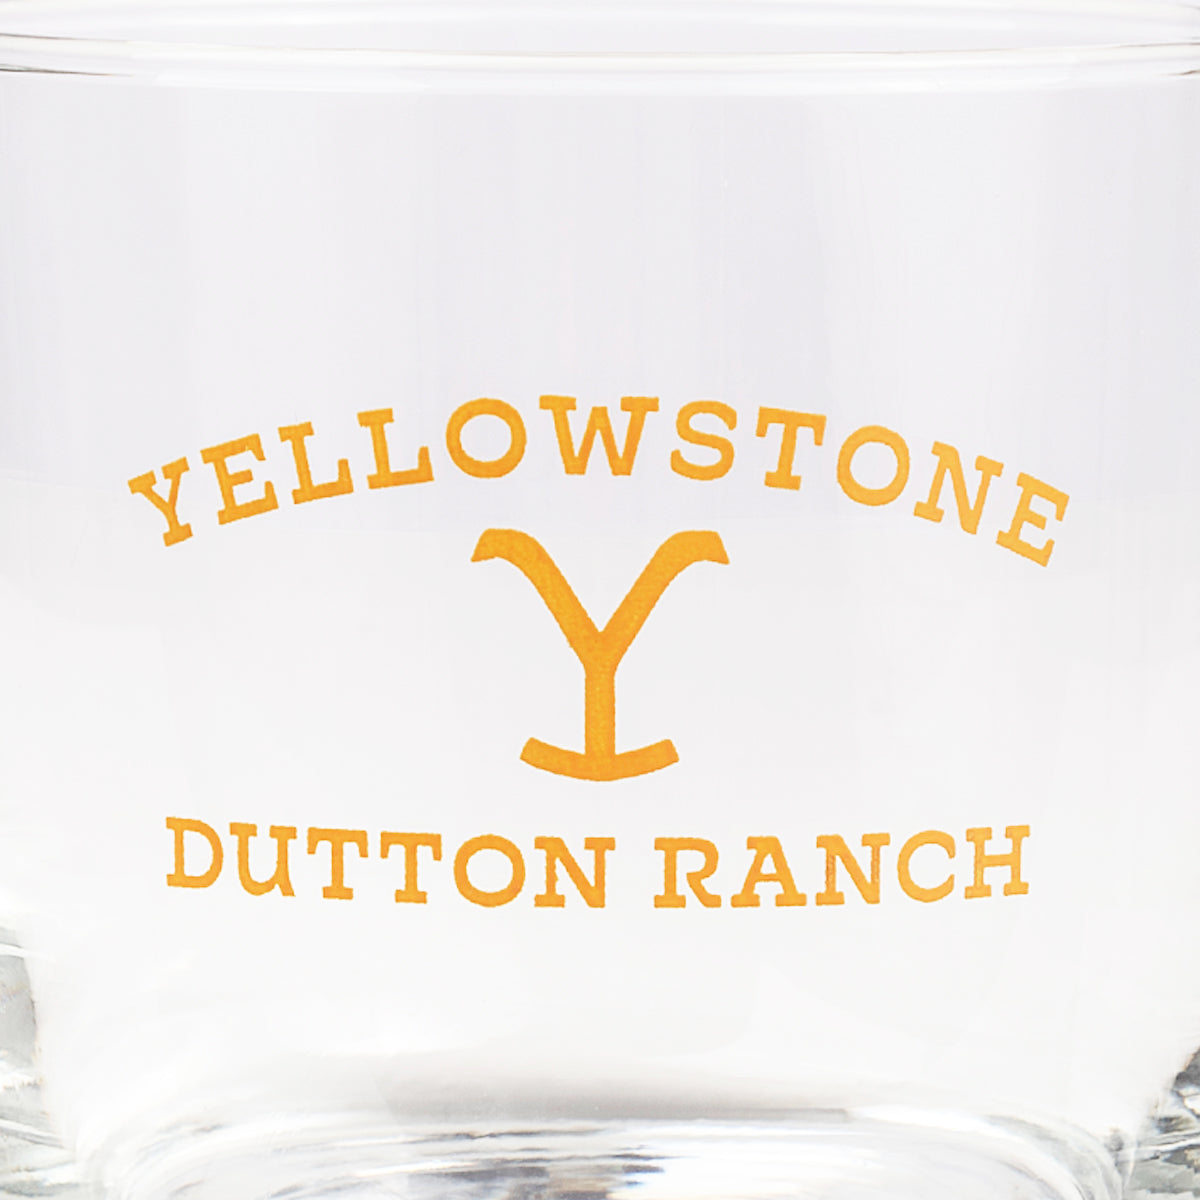 Yellowstone Vaso Rocks Dutton Ranch